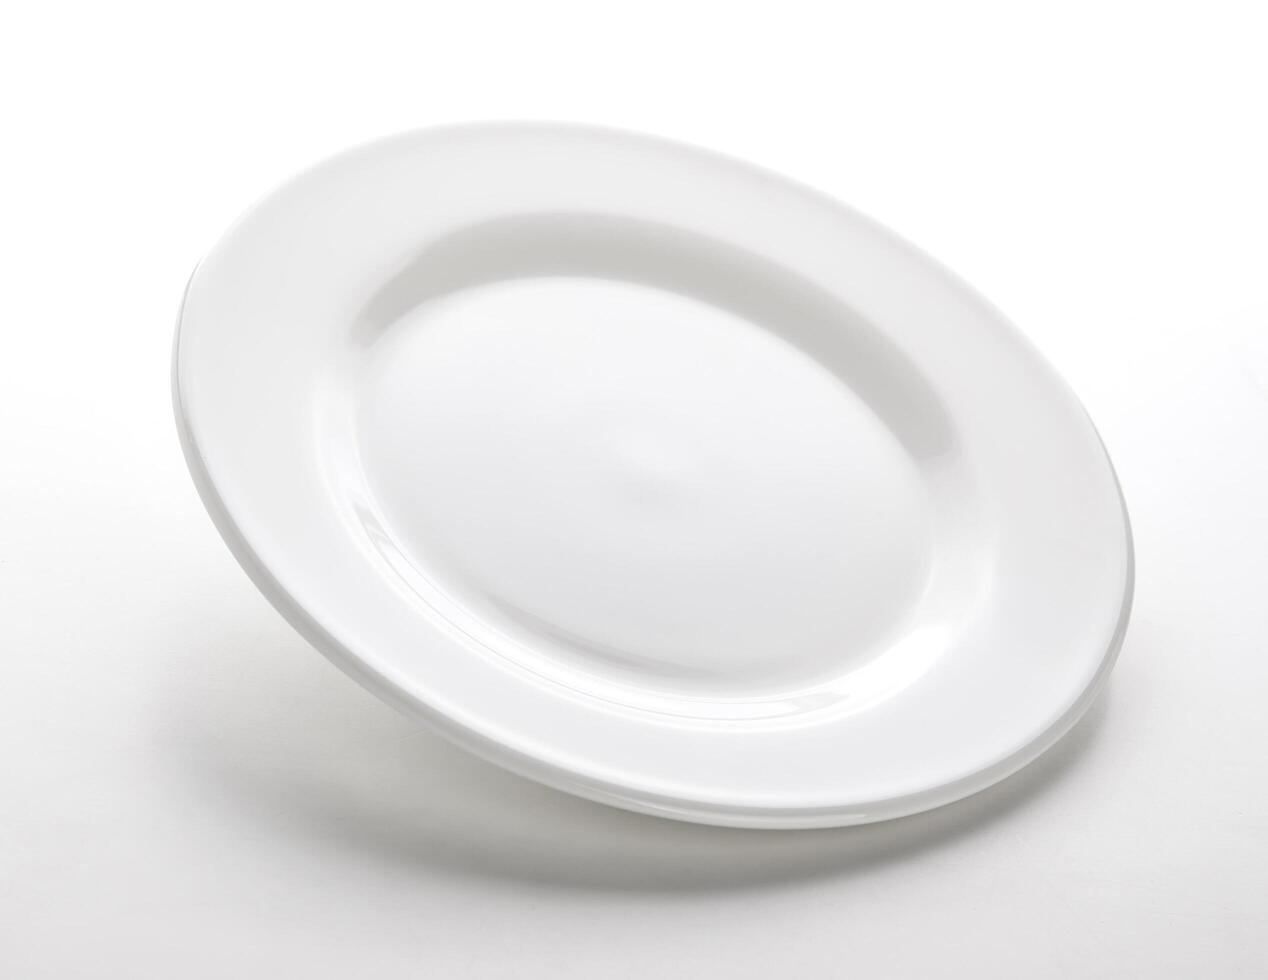 wit bord geïsoleerd Aan wit tafel, leeg schotel sjabloon foto